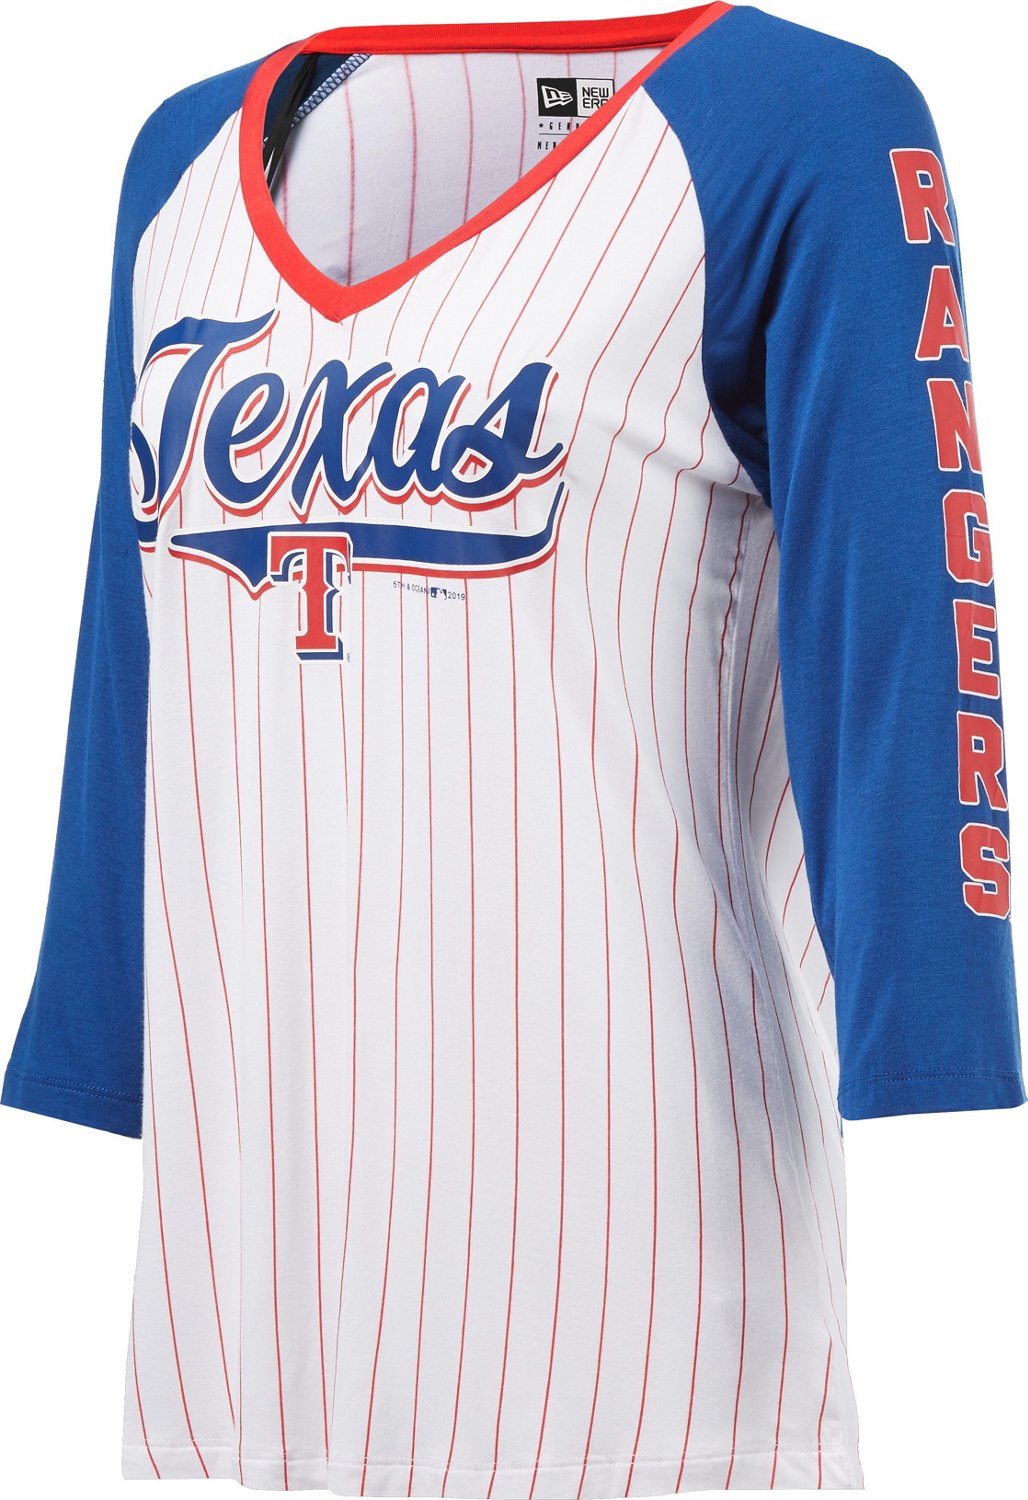 Texas Rangers Shirts \u0026 Apparel 